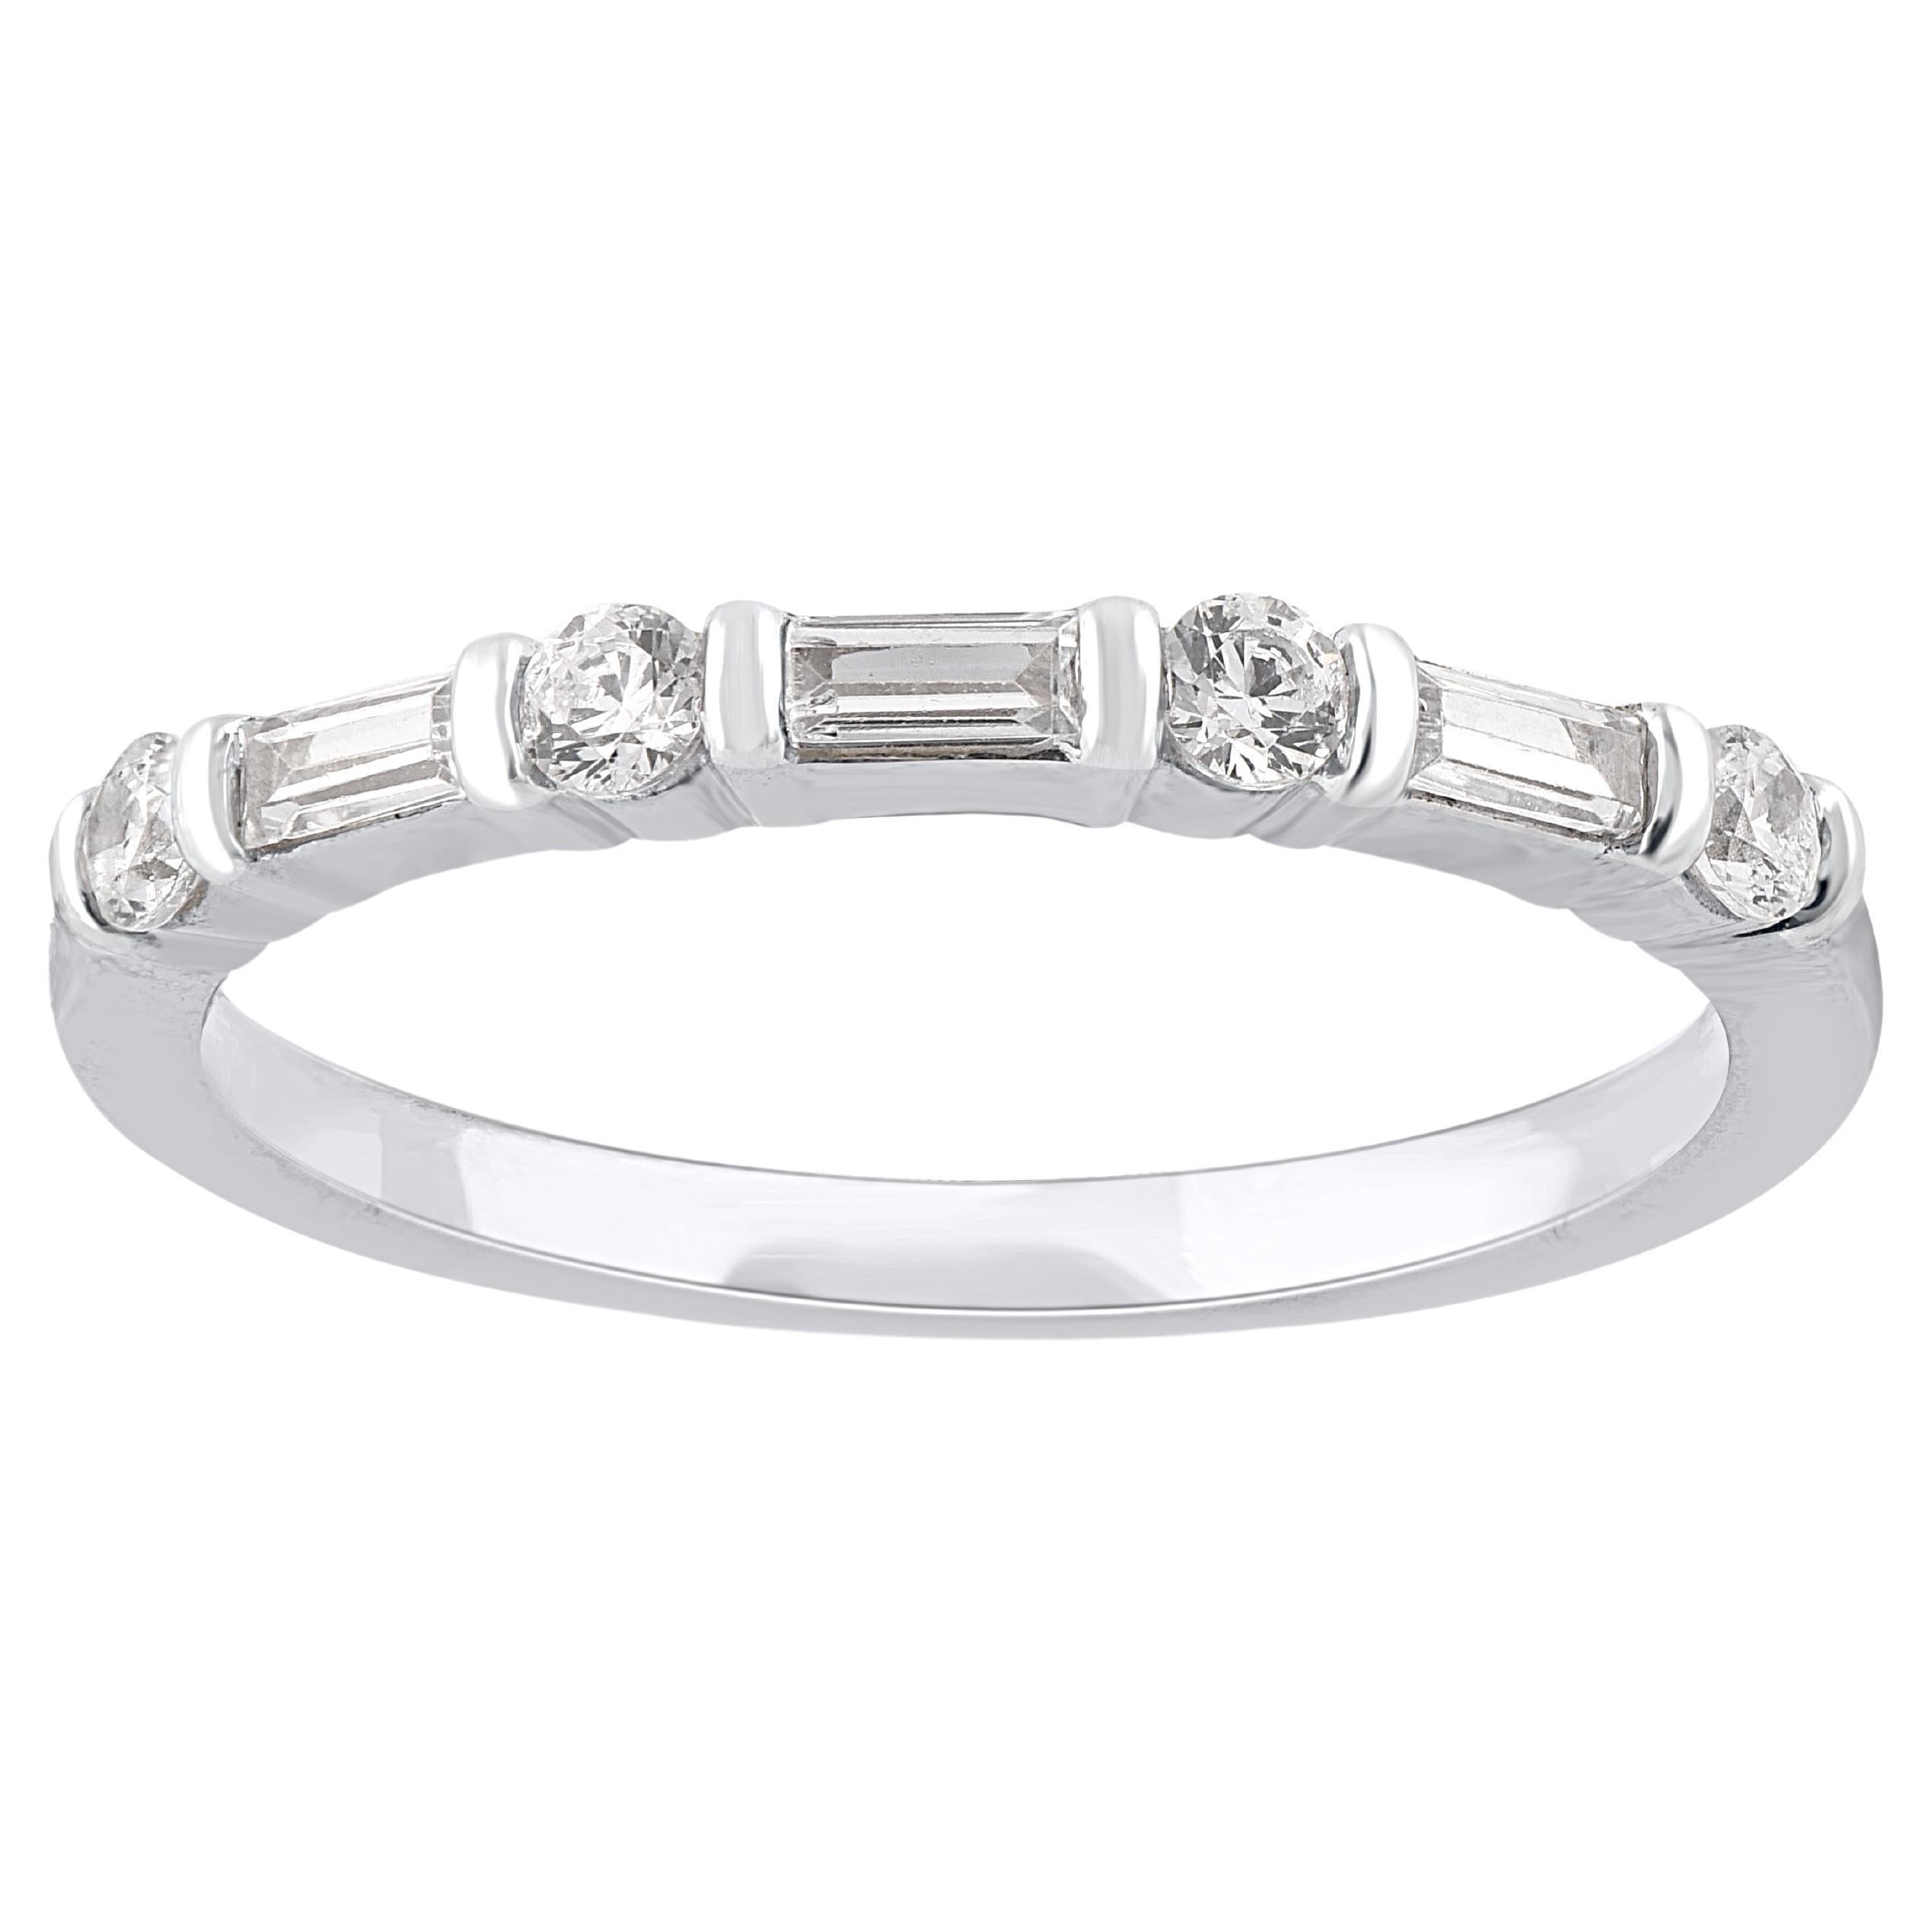 TJD 0.50 Carat Brilliant & Baguette Diamond 14KT White Gold Wedding Band Ring